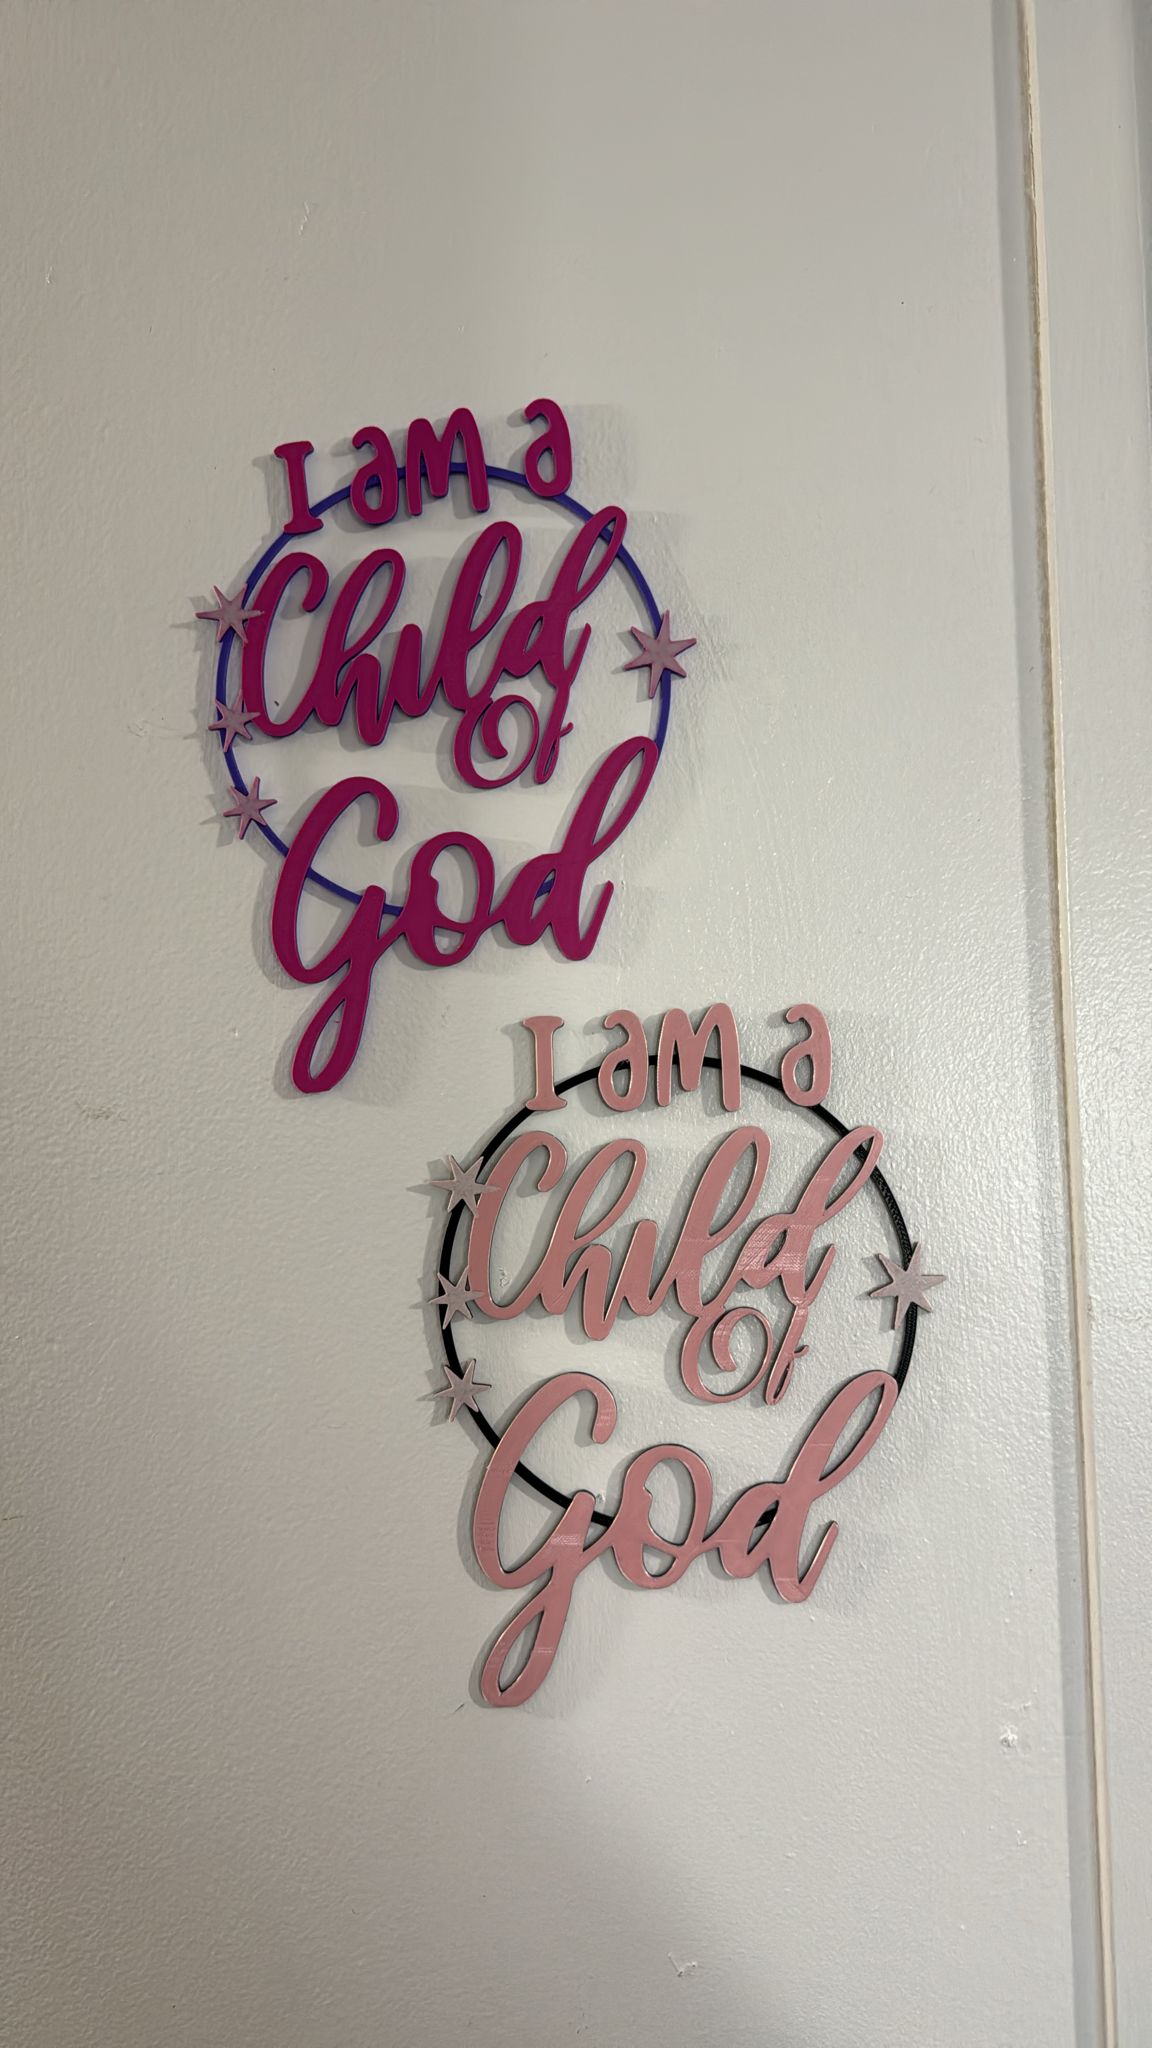 I am a Child of God - Wall Art